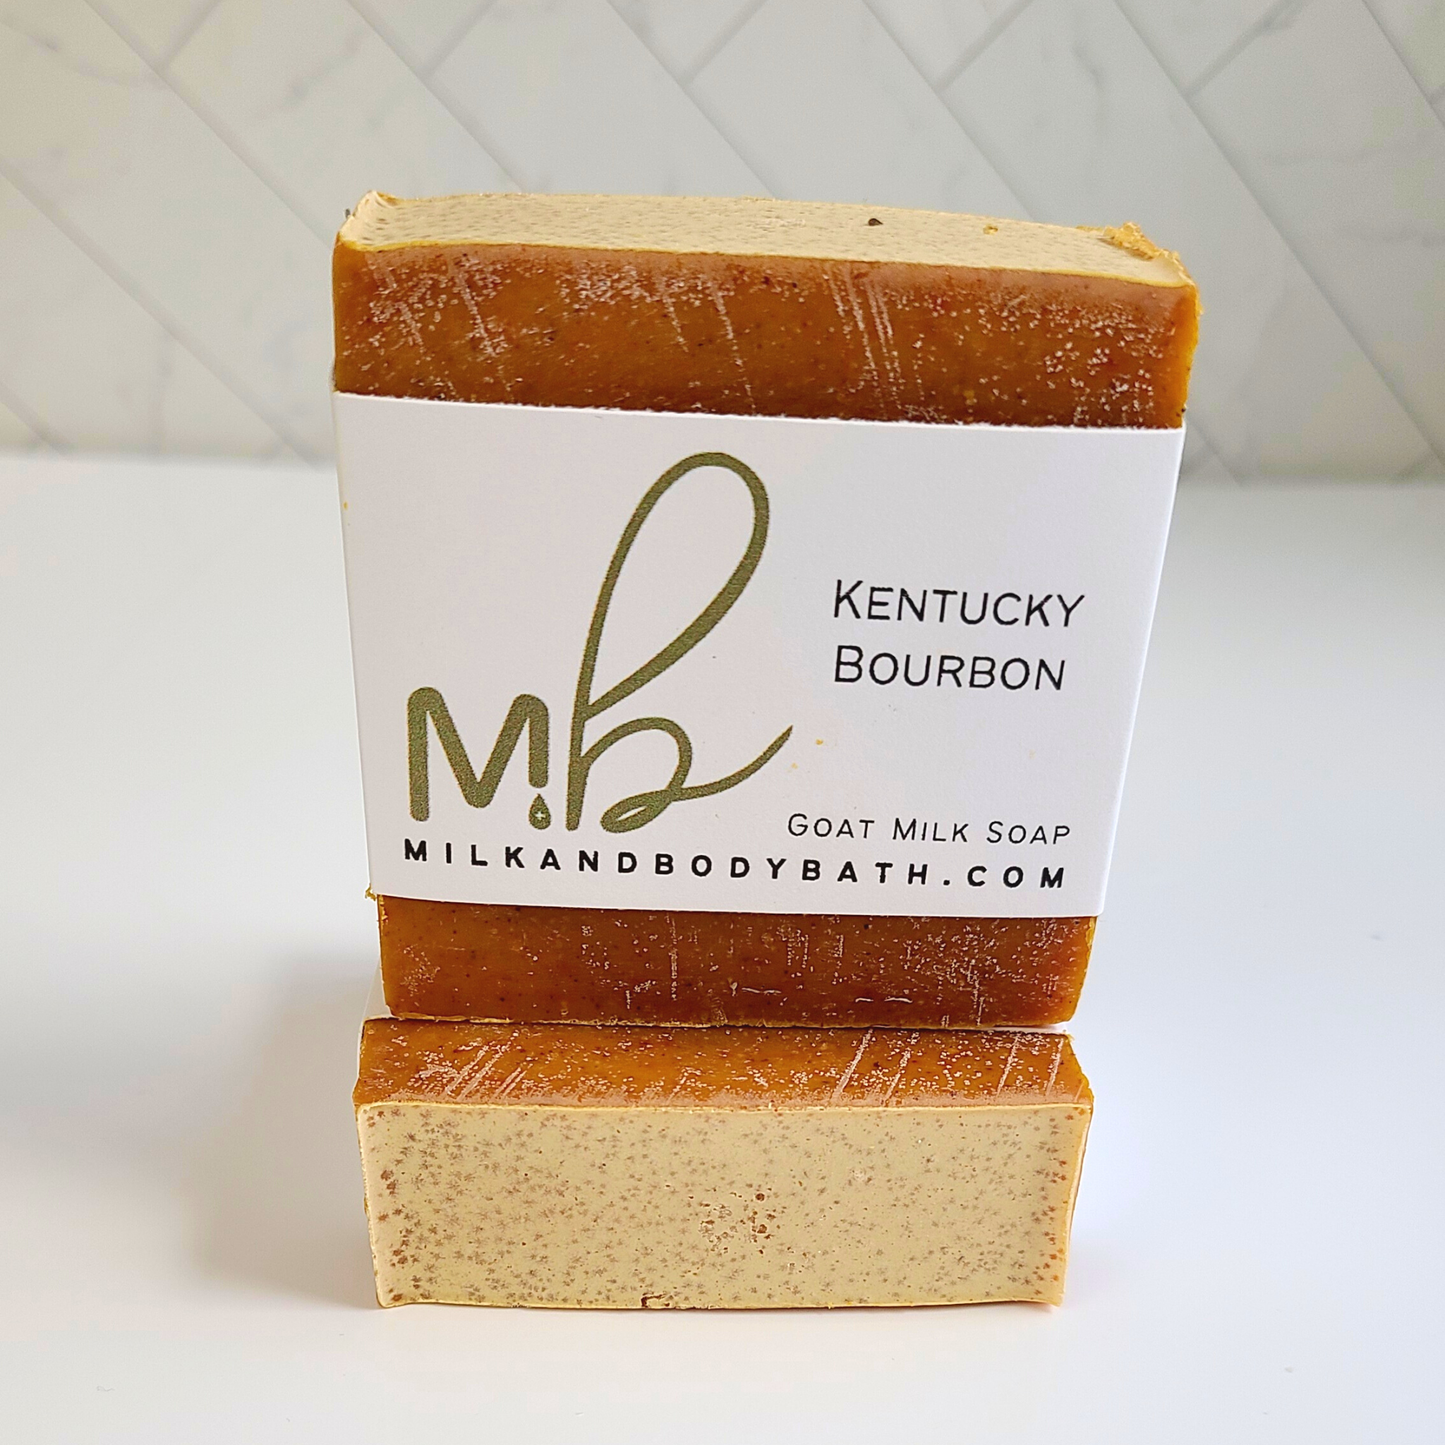 Kentucky Bourbon Goat Milk Soap